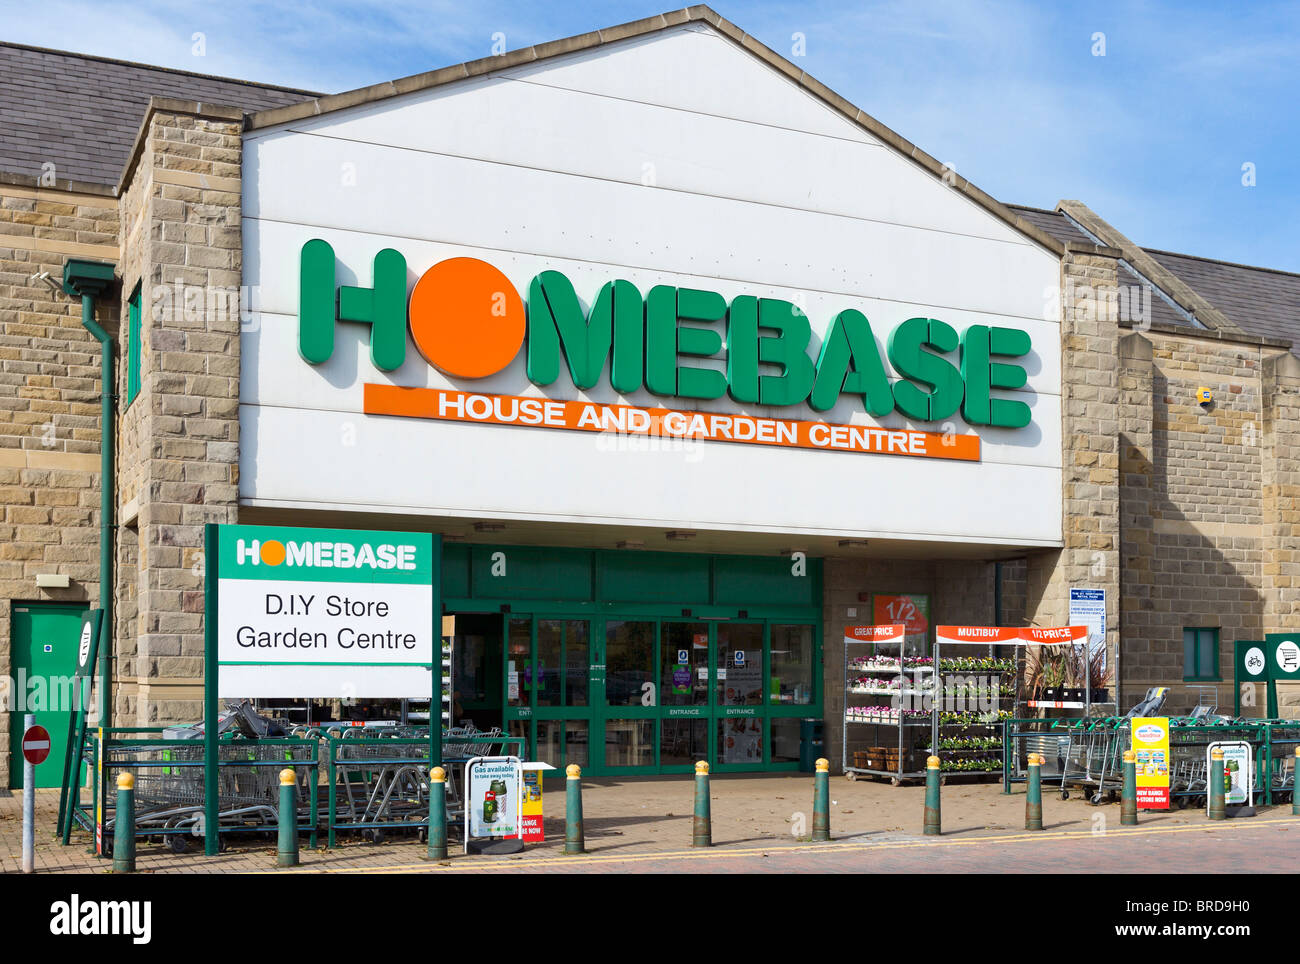 Homebase superstore, Great Northern Retail Park, Leeds Road, Huddersfield, West Yorkshire, England, UK Banque D'Images